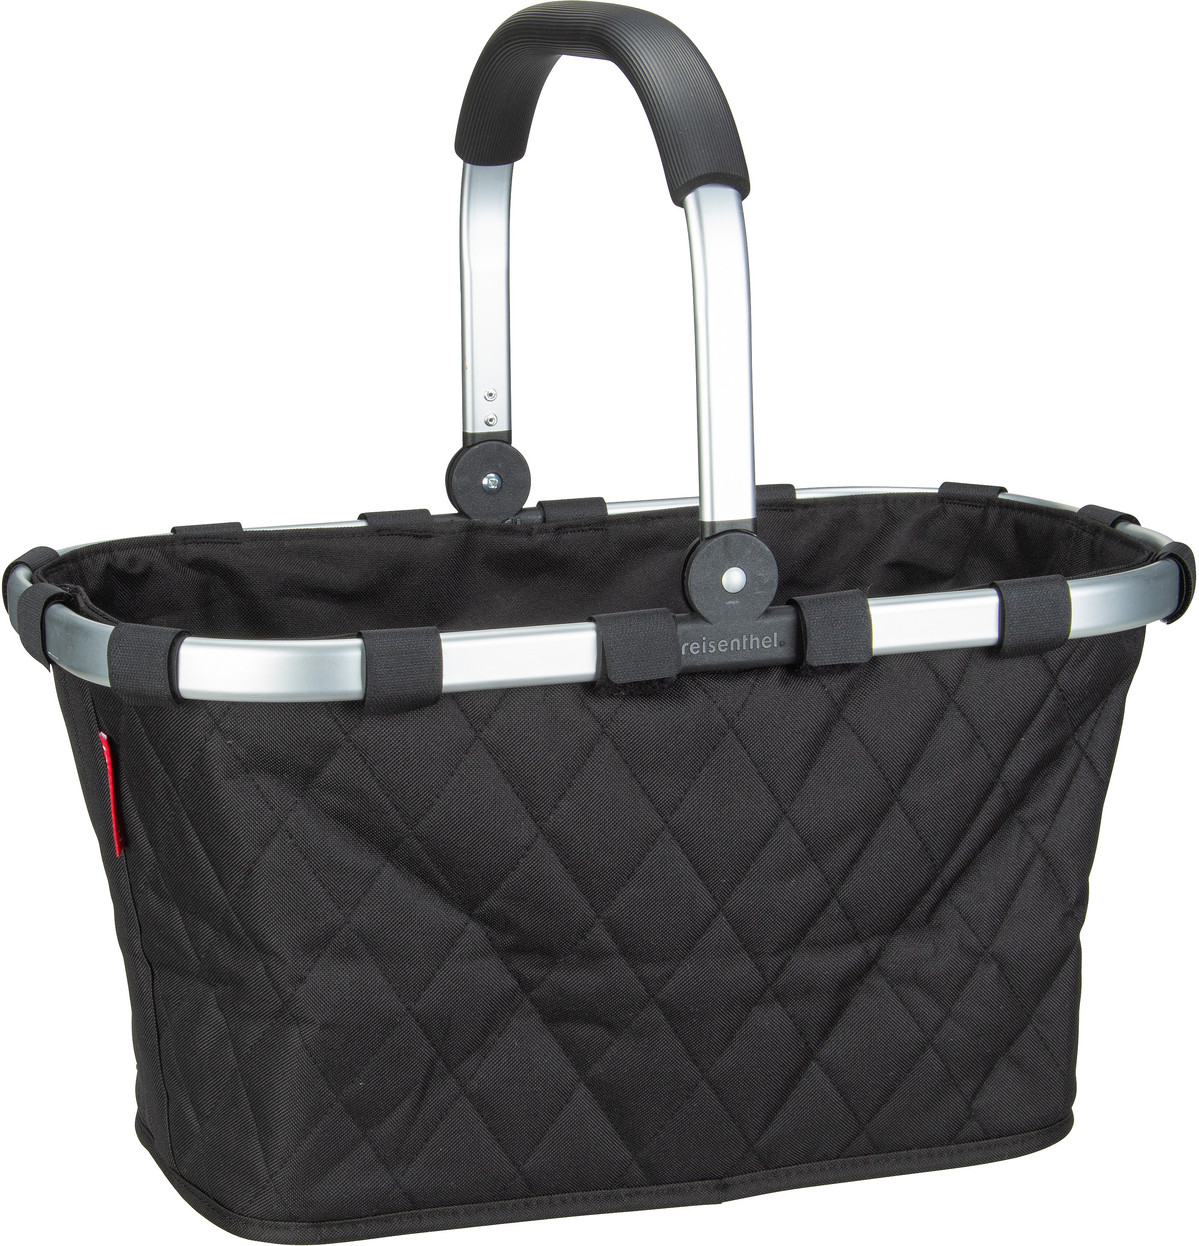 reisenthel carrybag special edition - Rhombus Black